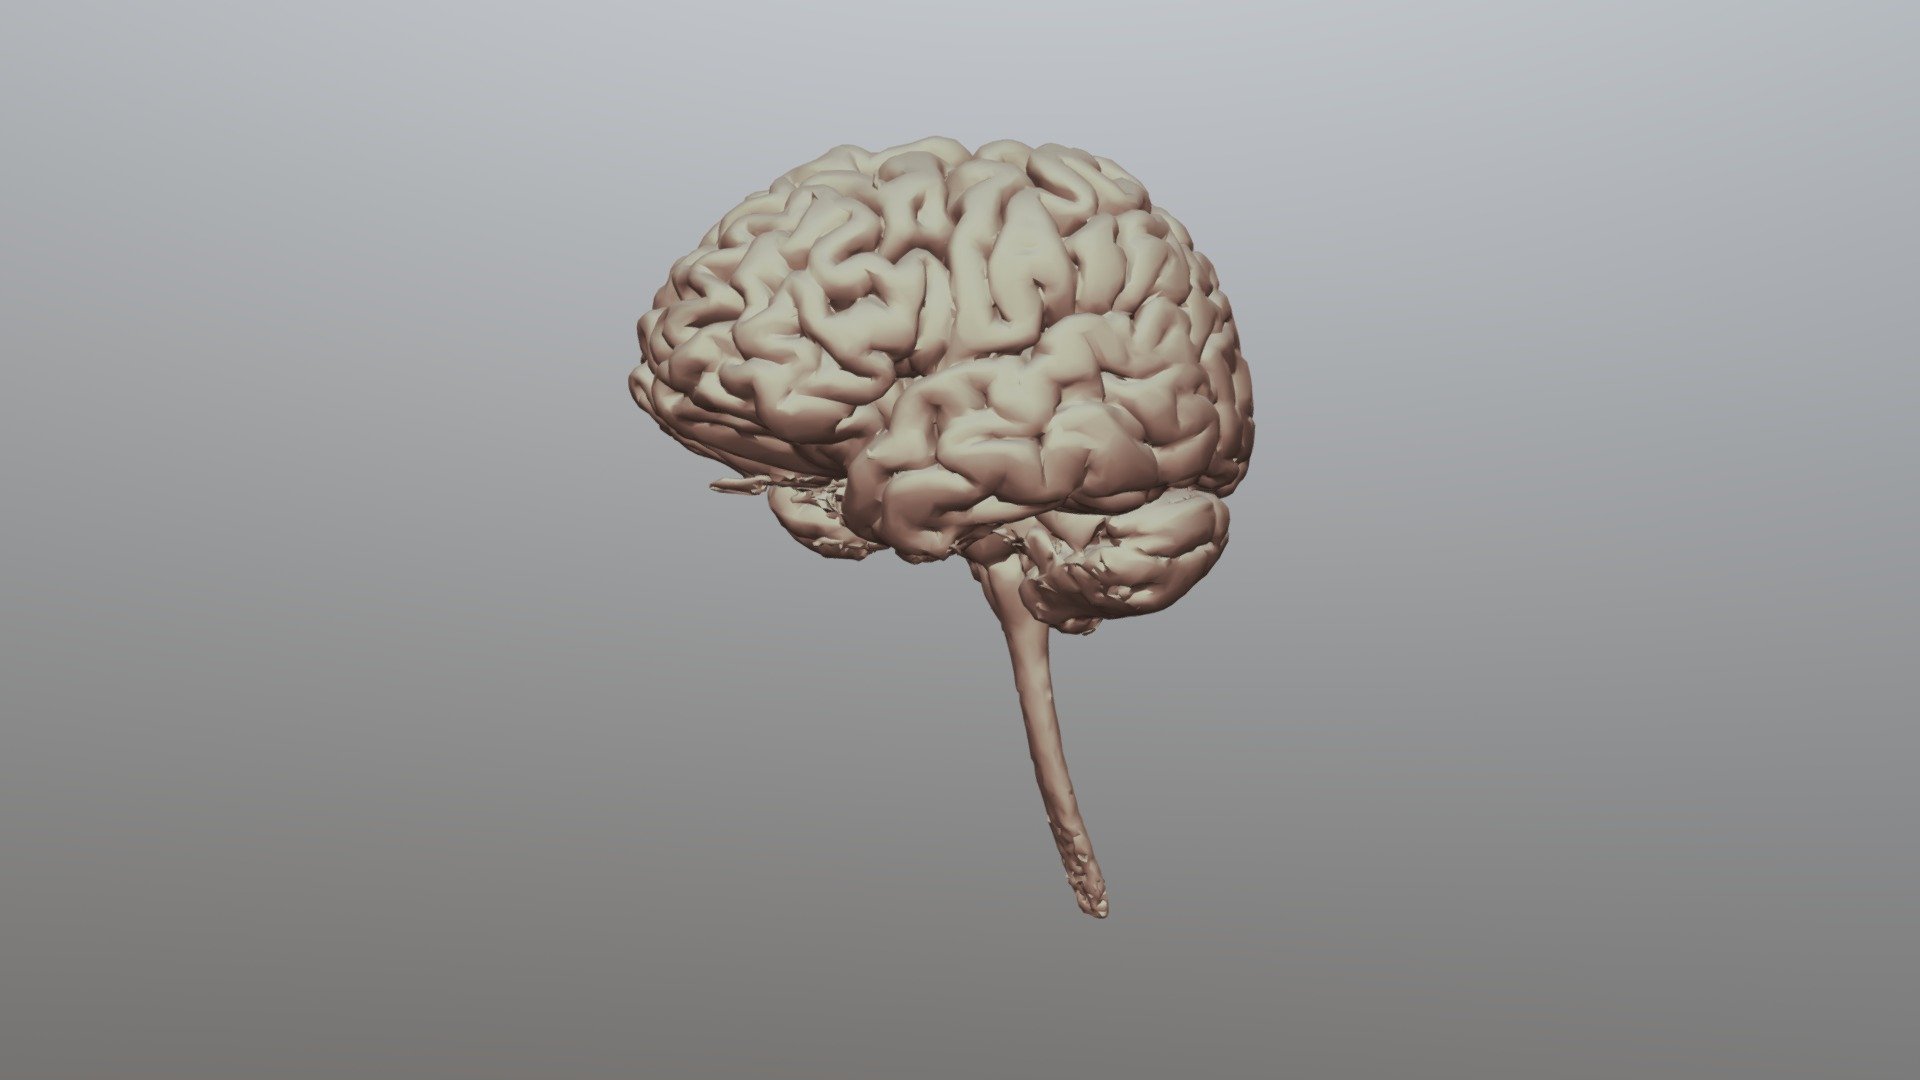 3D Model Of Brain